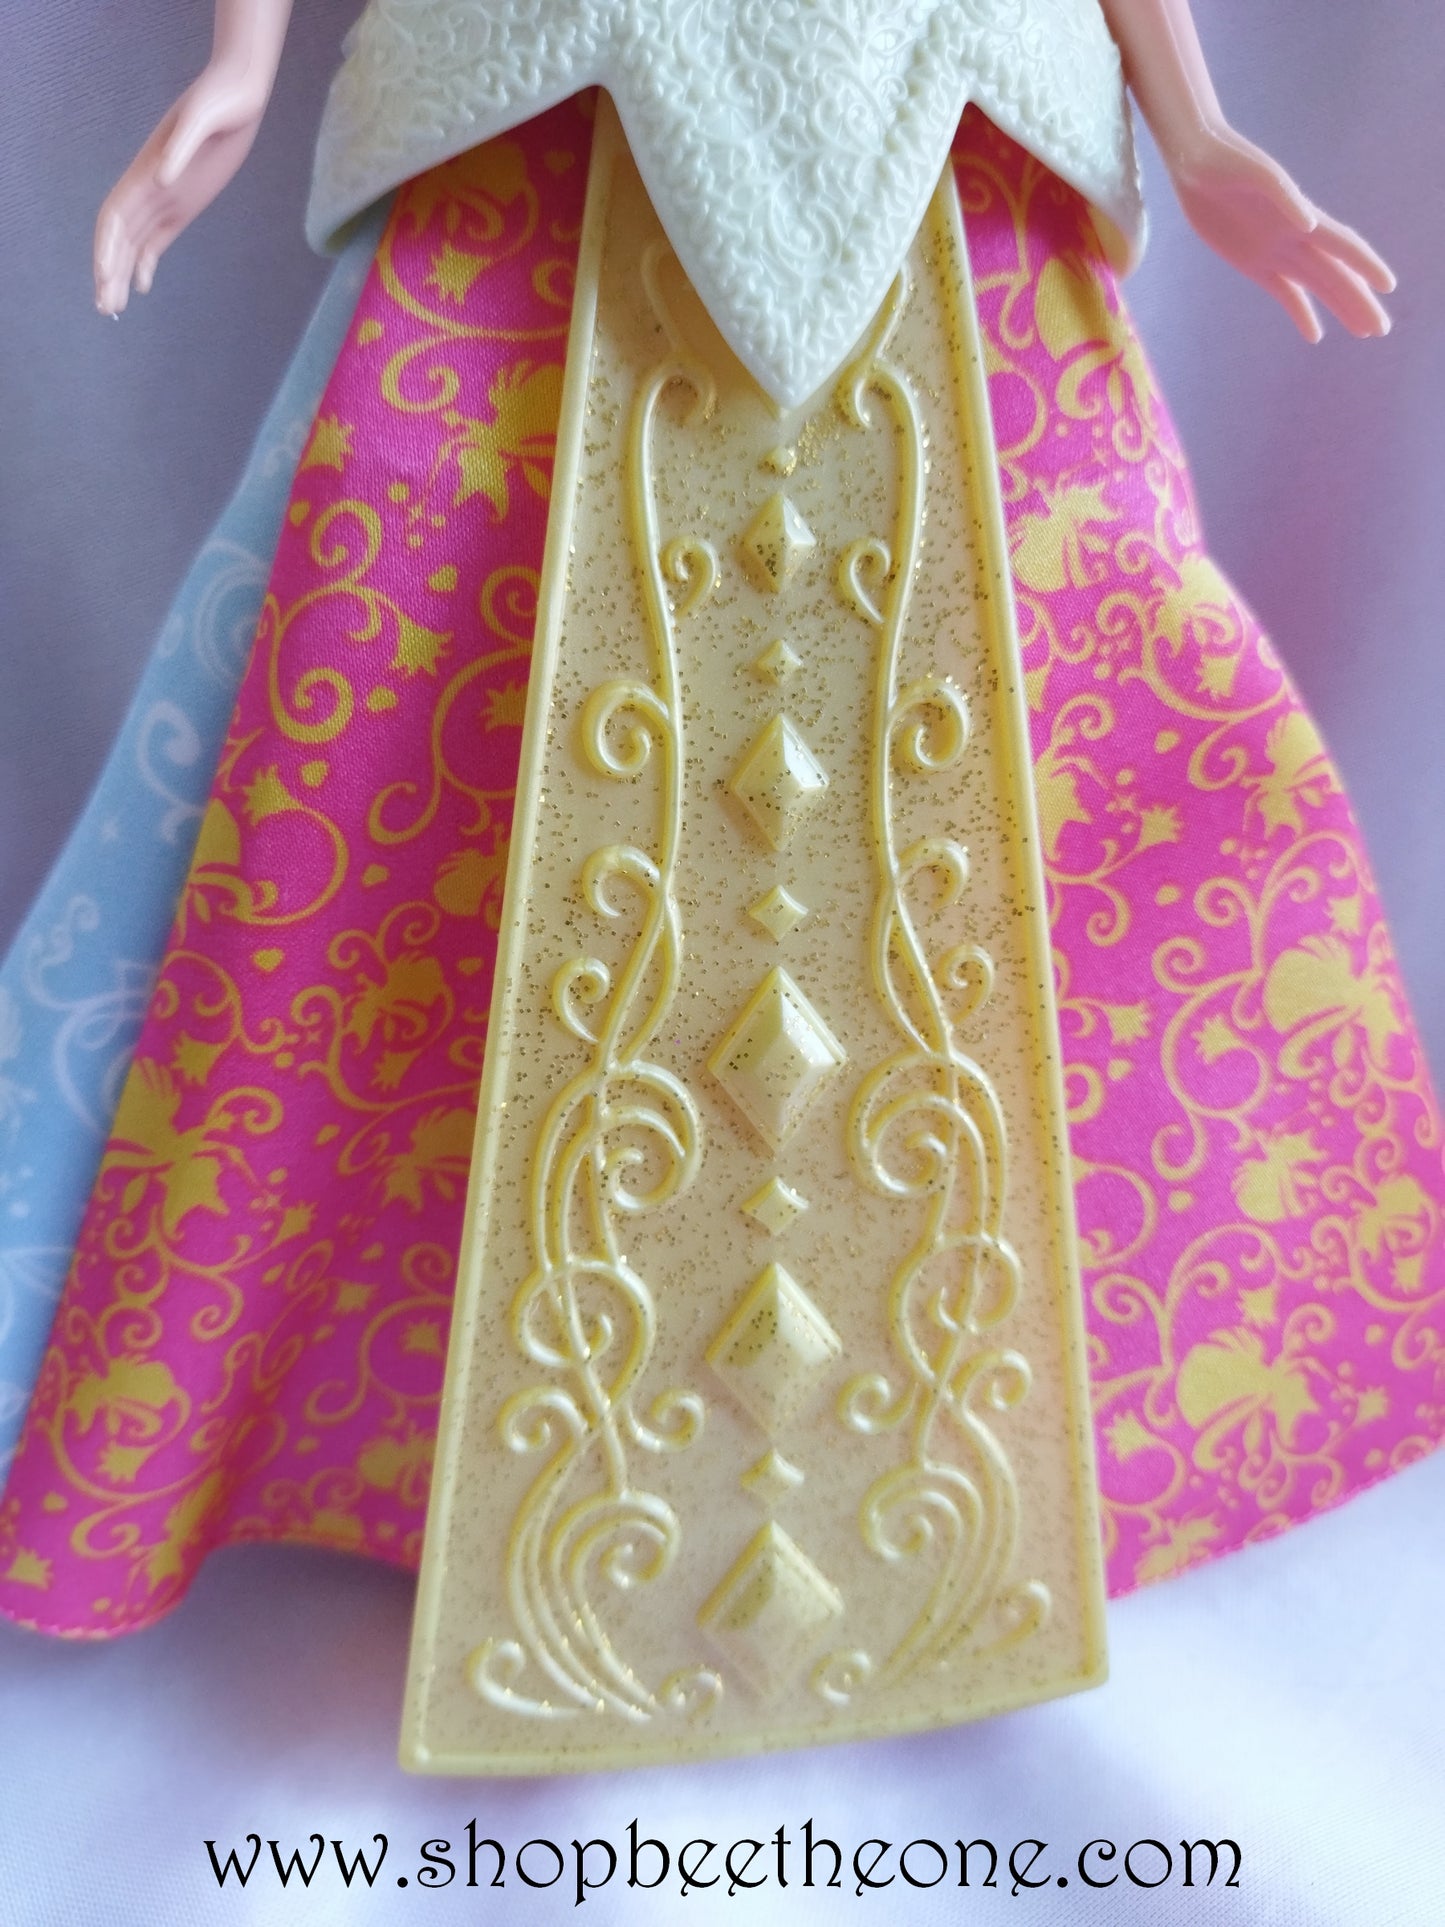 Disney Princesses Aurore Robe Enchantée (Magic Dress Sleeping Beauty) - Mattel 2014 - Poupée